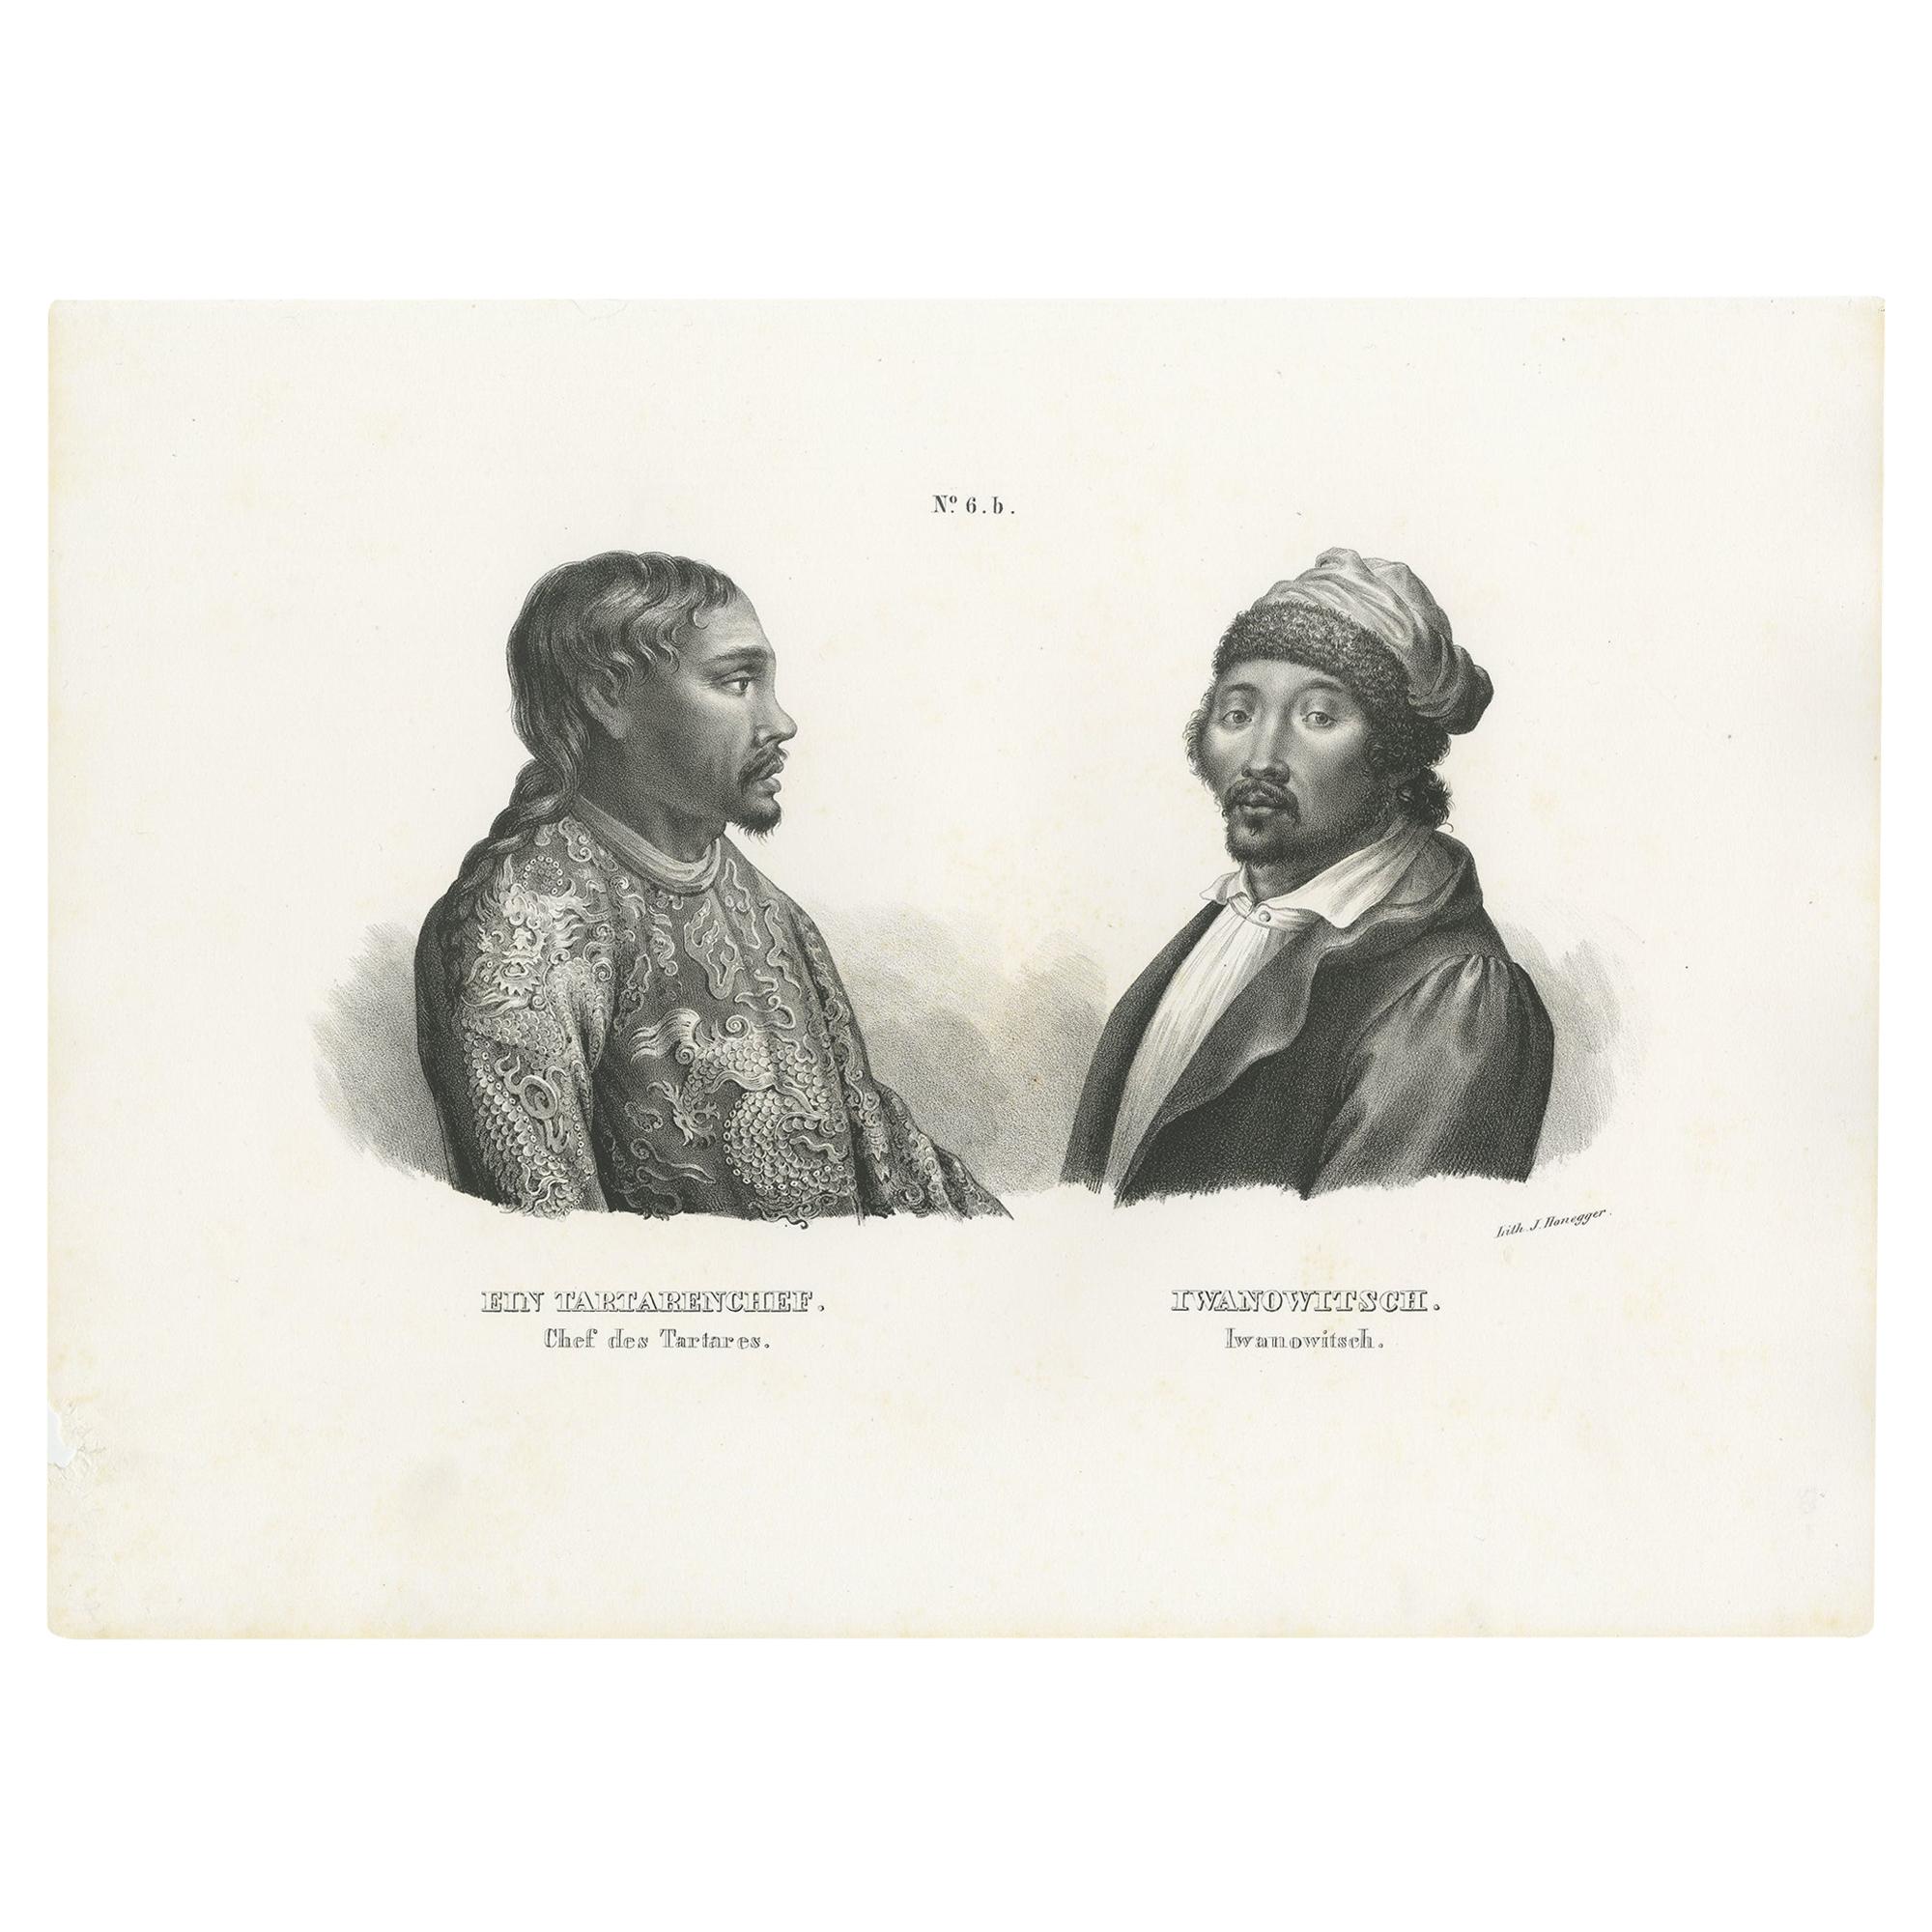 Antique Print of a Tartar Chief and Feodor, a Kalmyk, by Honegger, 1845